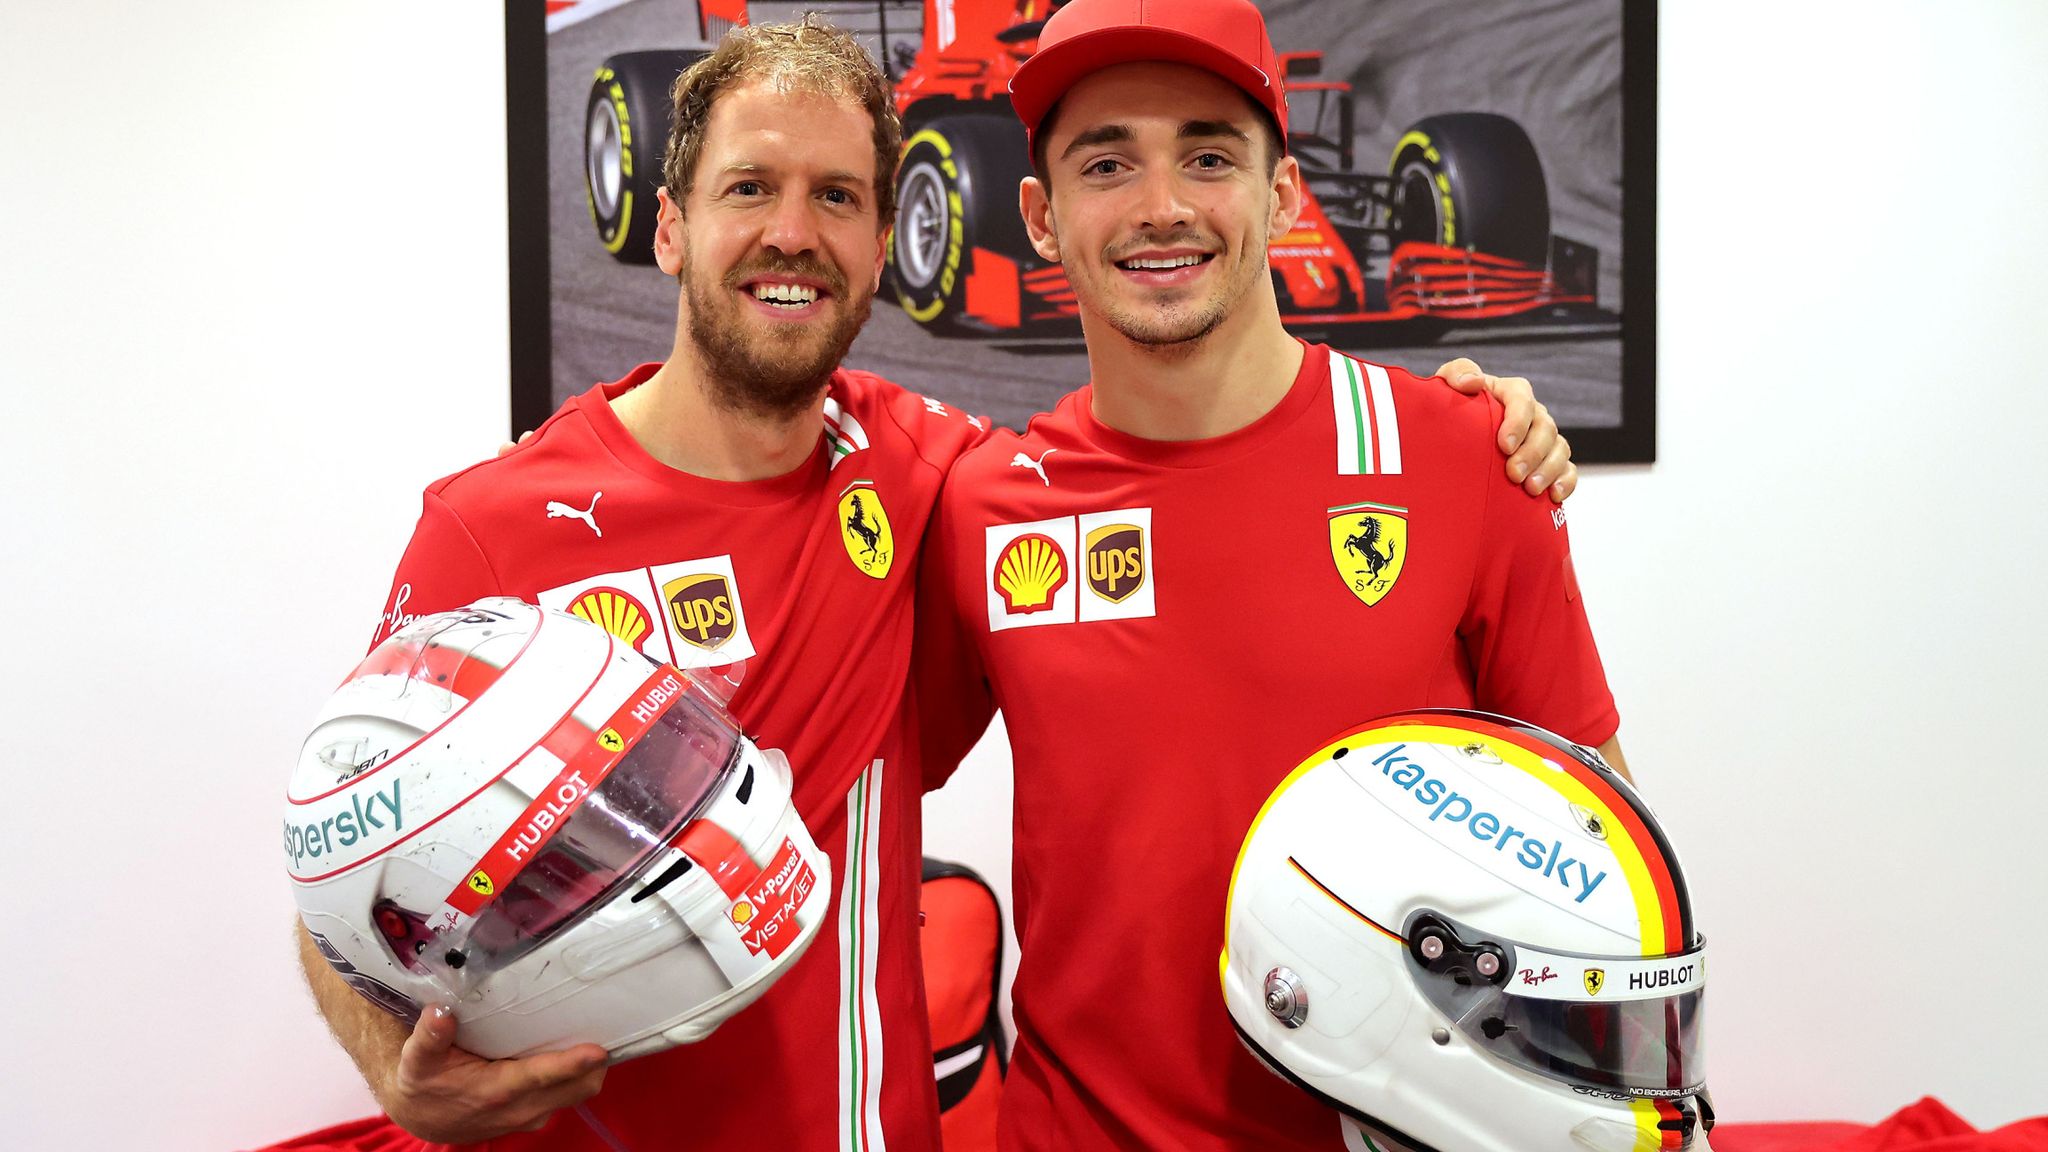 Scuderia Ferrari and Charles Leclerc moving forward together